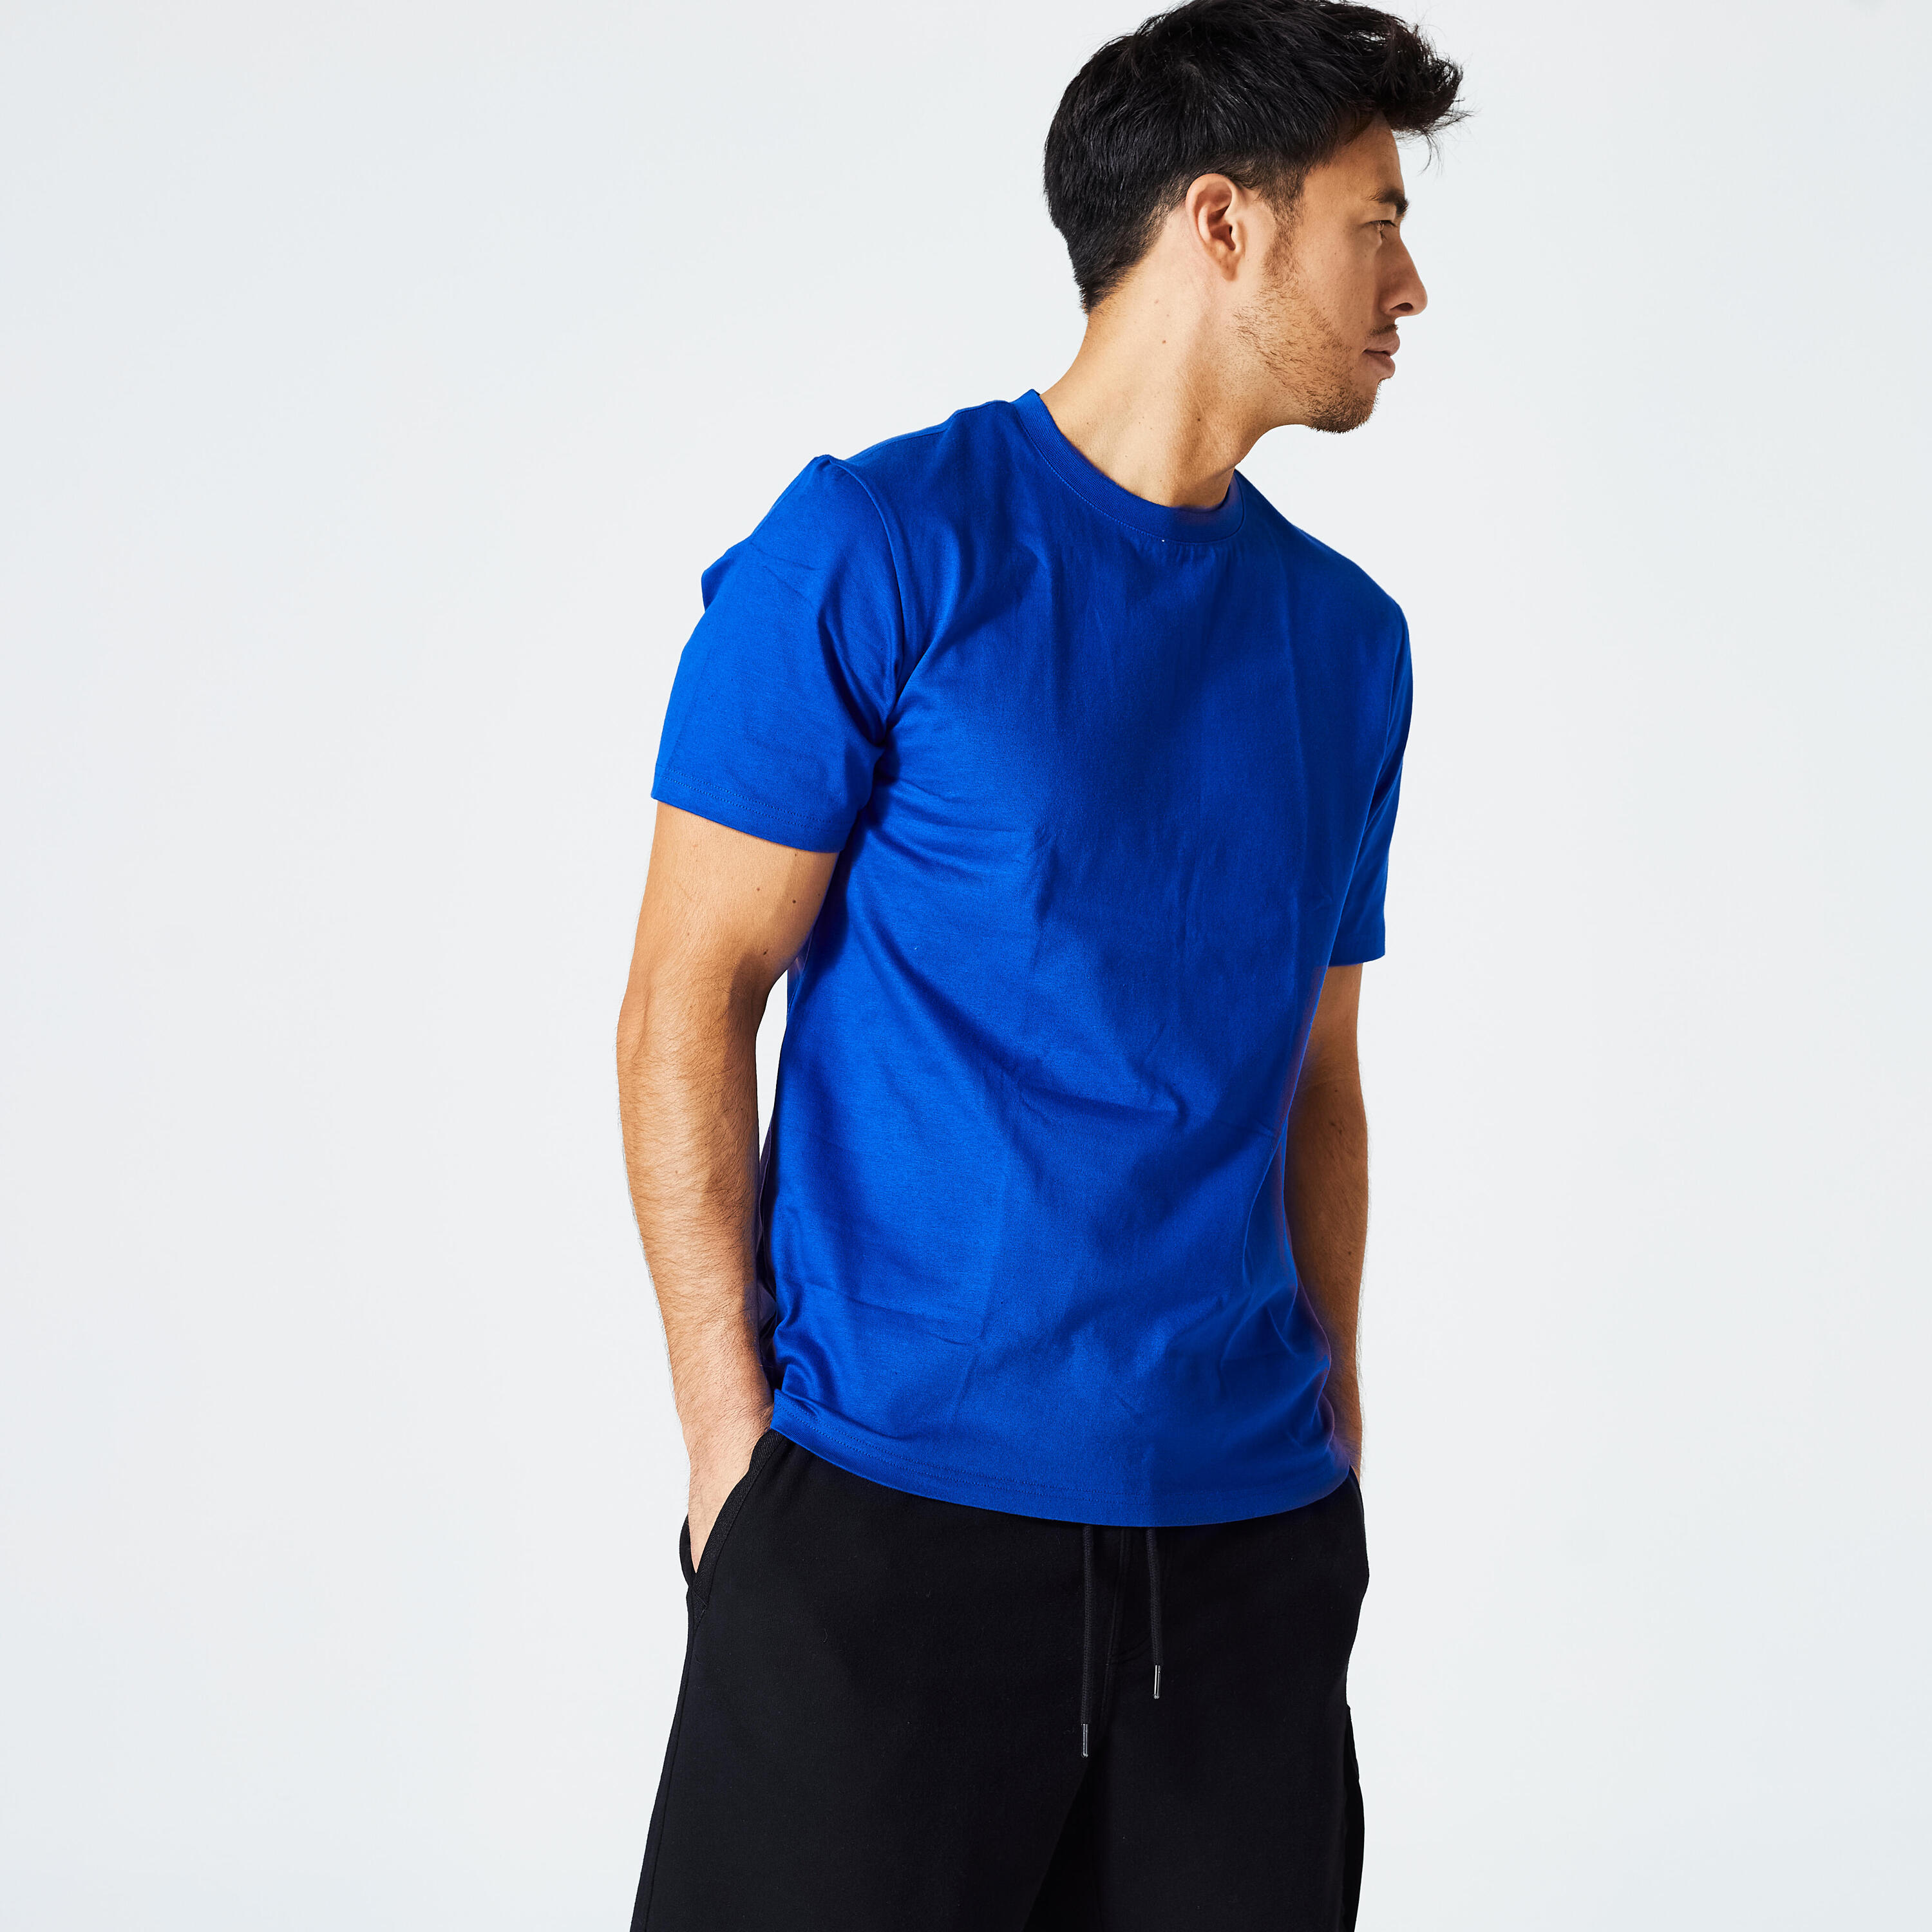 Men's Fitness T-Shirt 500 Essentials - Indigo Blue 1/5